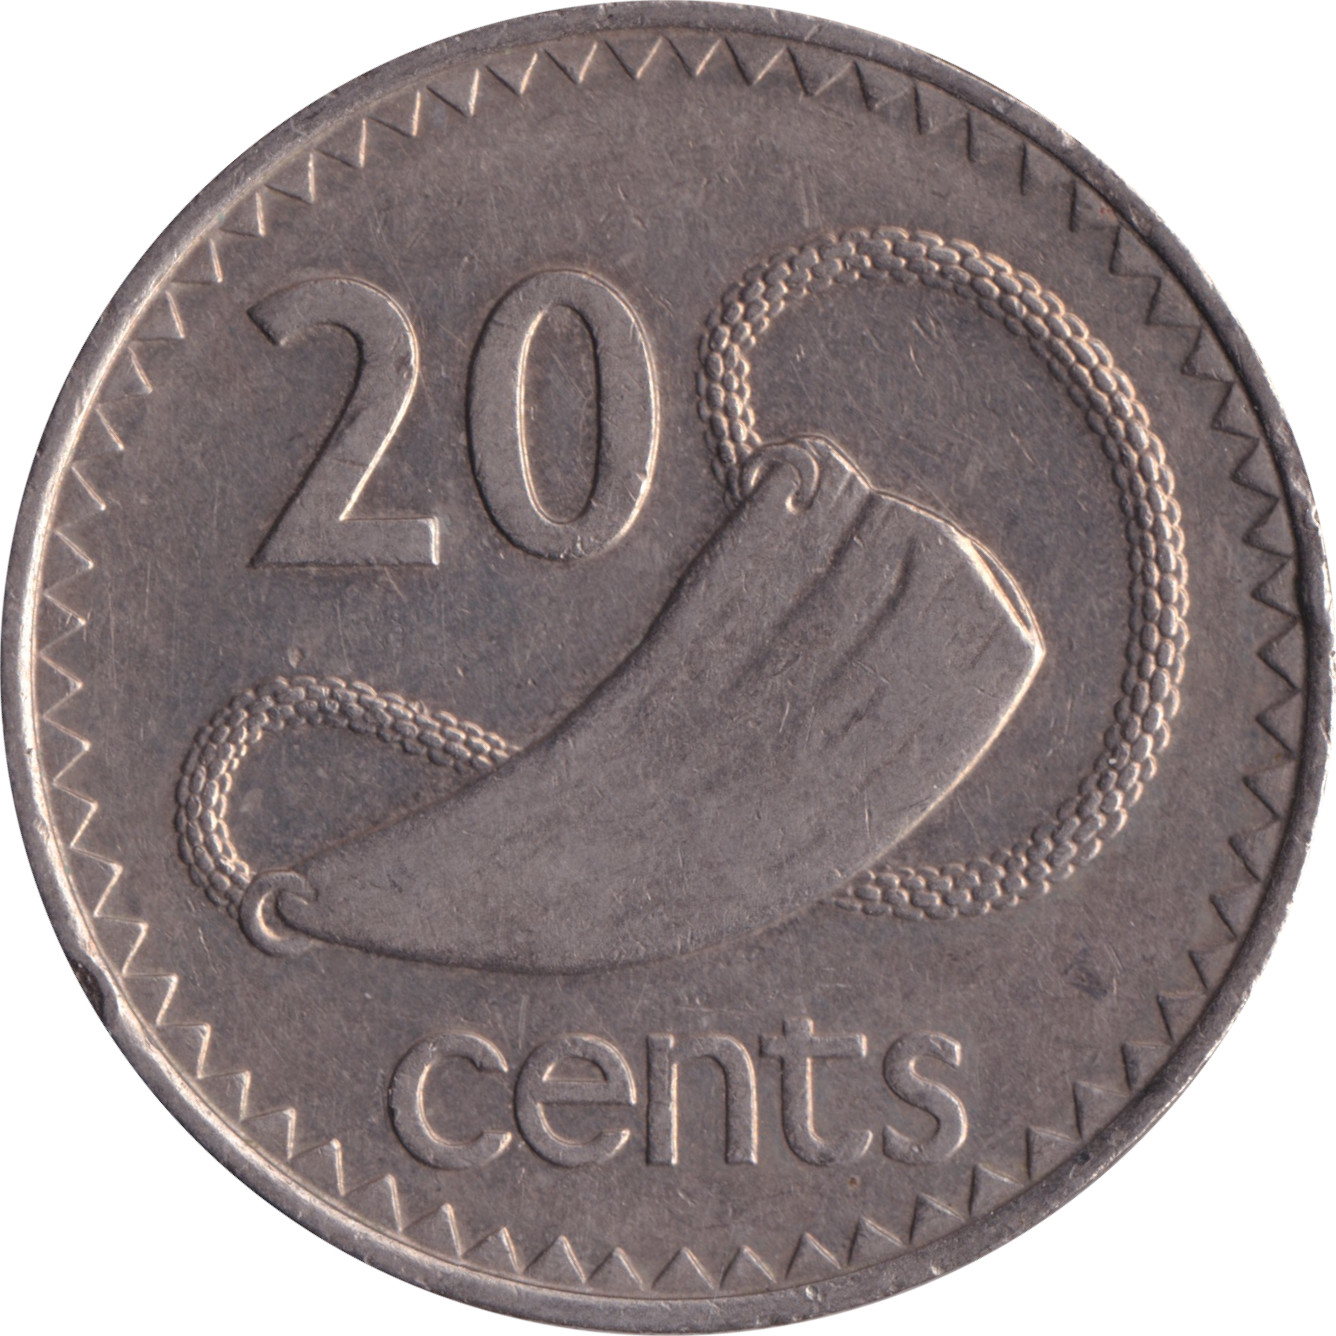 20 cents - Élizabeth II - Young bust